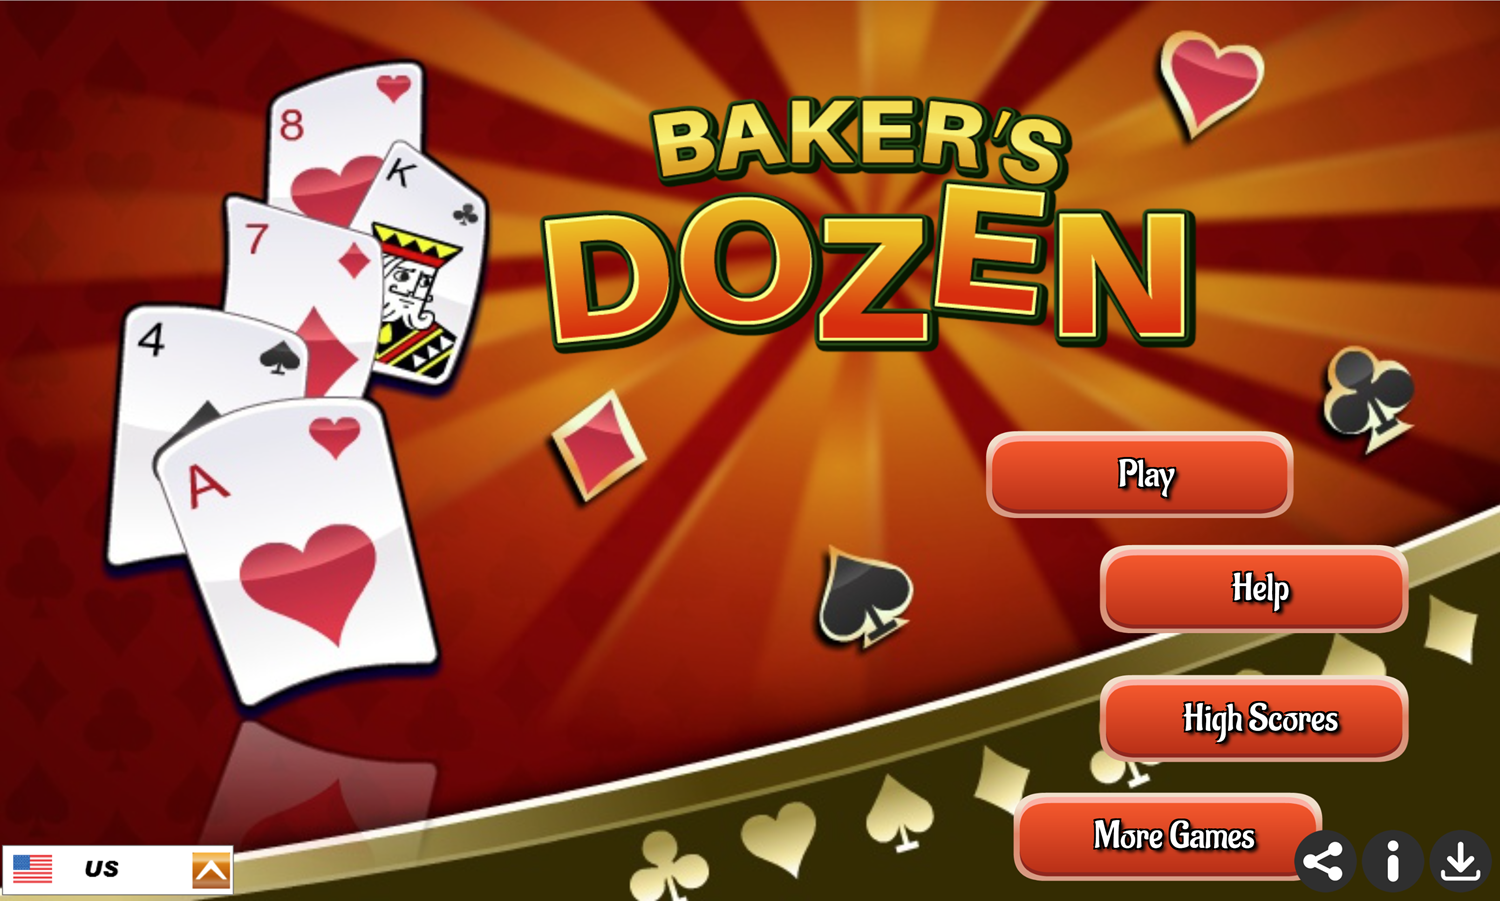 Baker's Dozen Game Welcome Screen Screenshot.